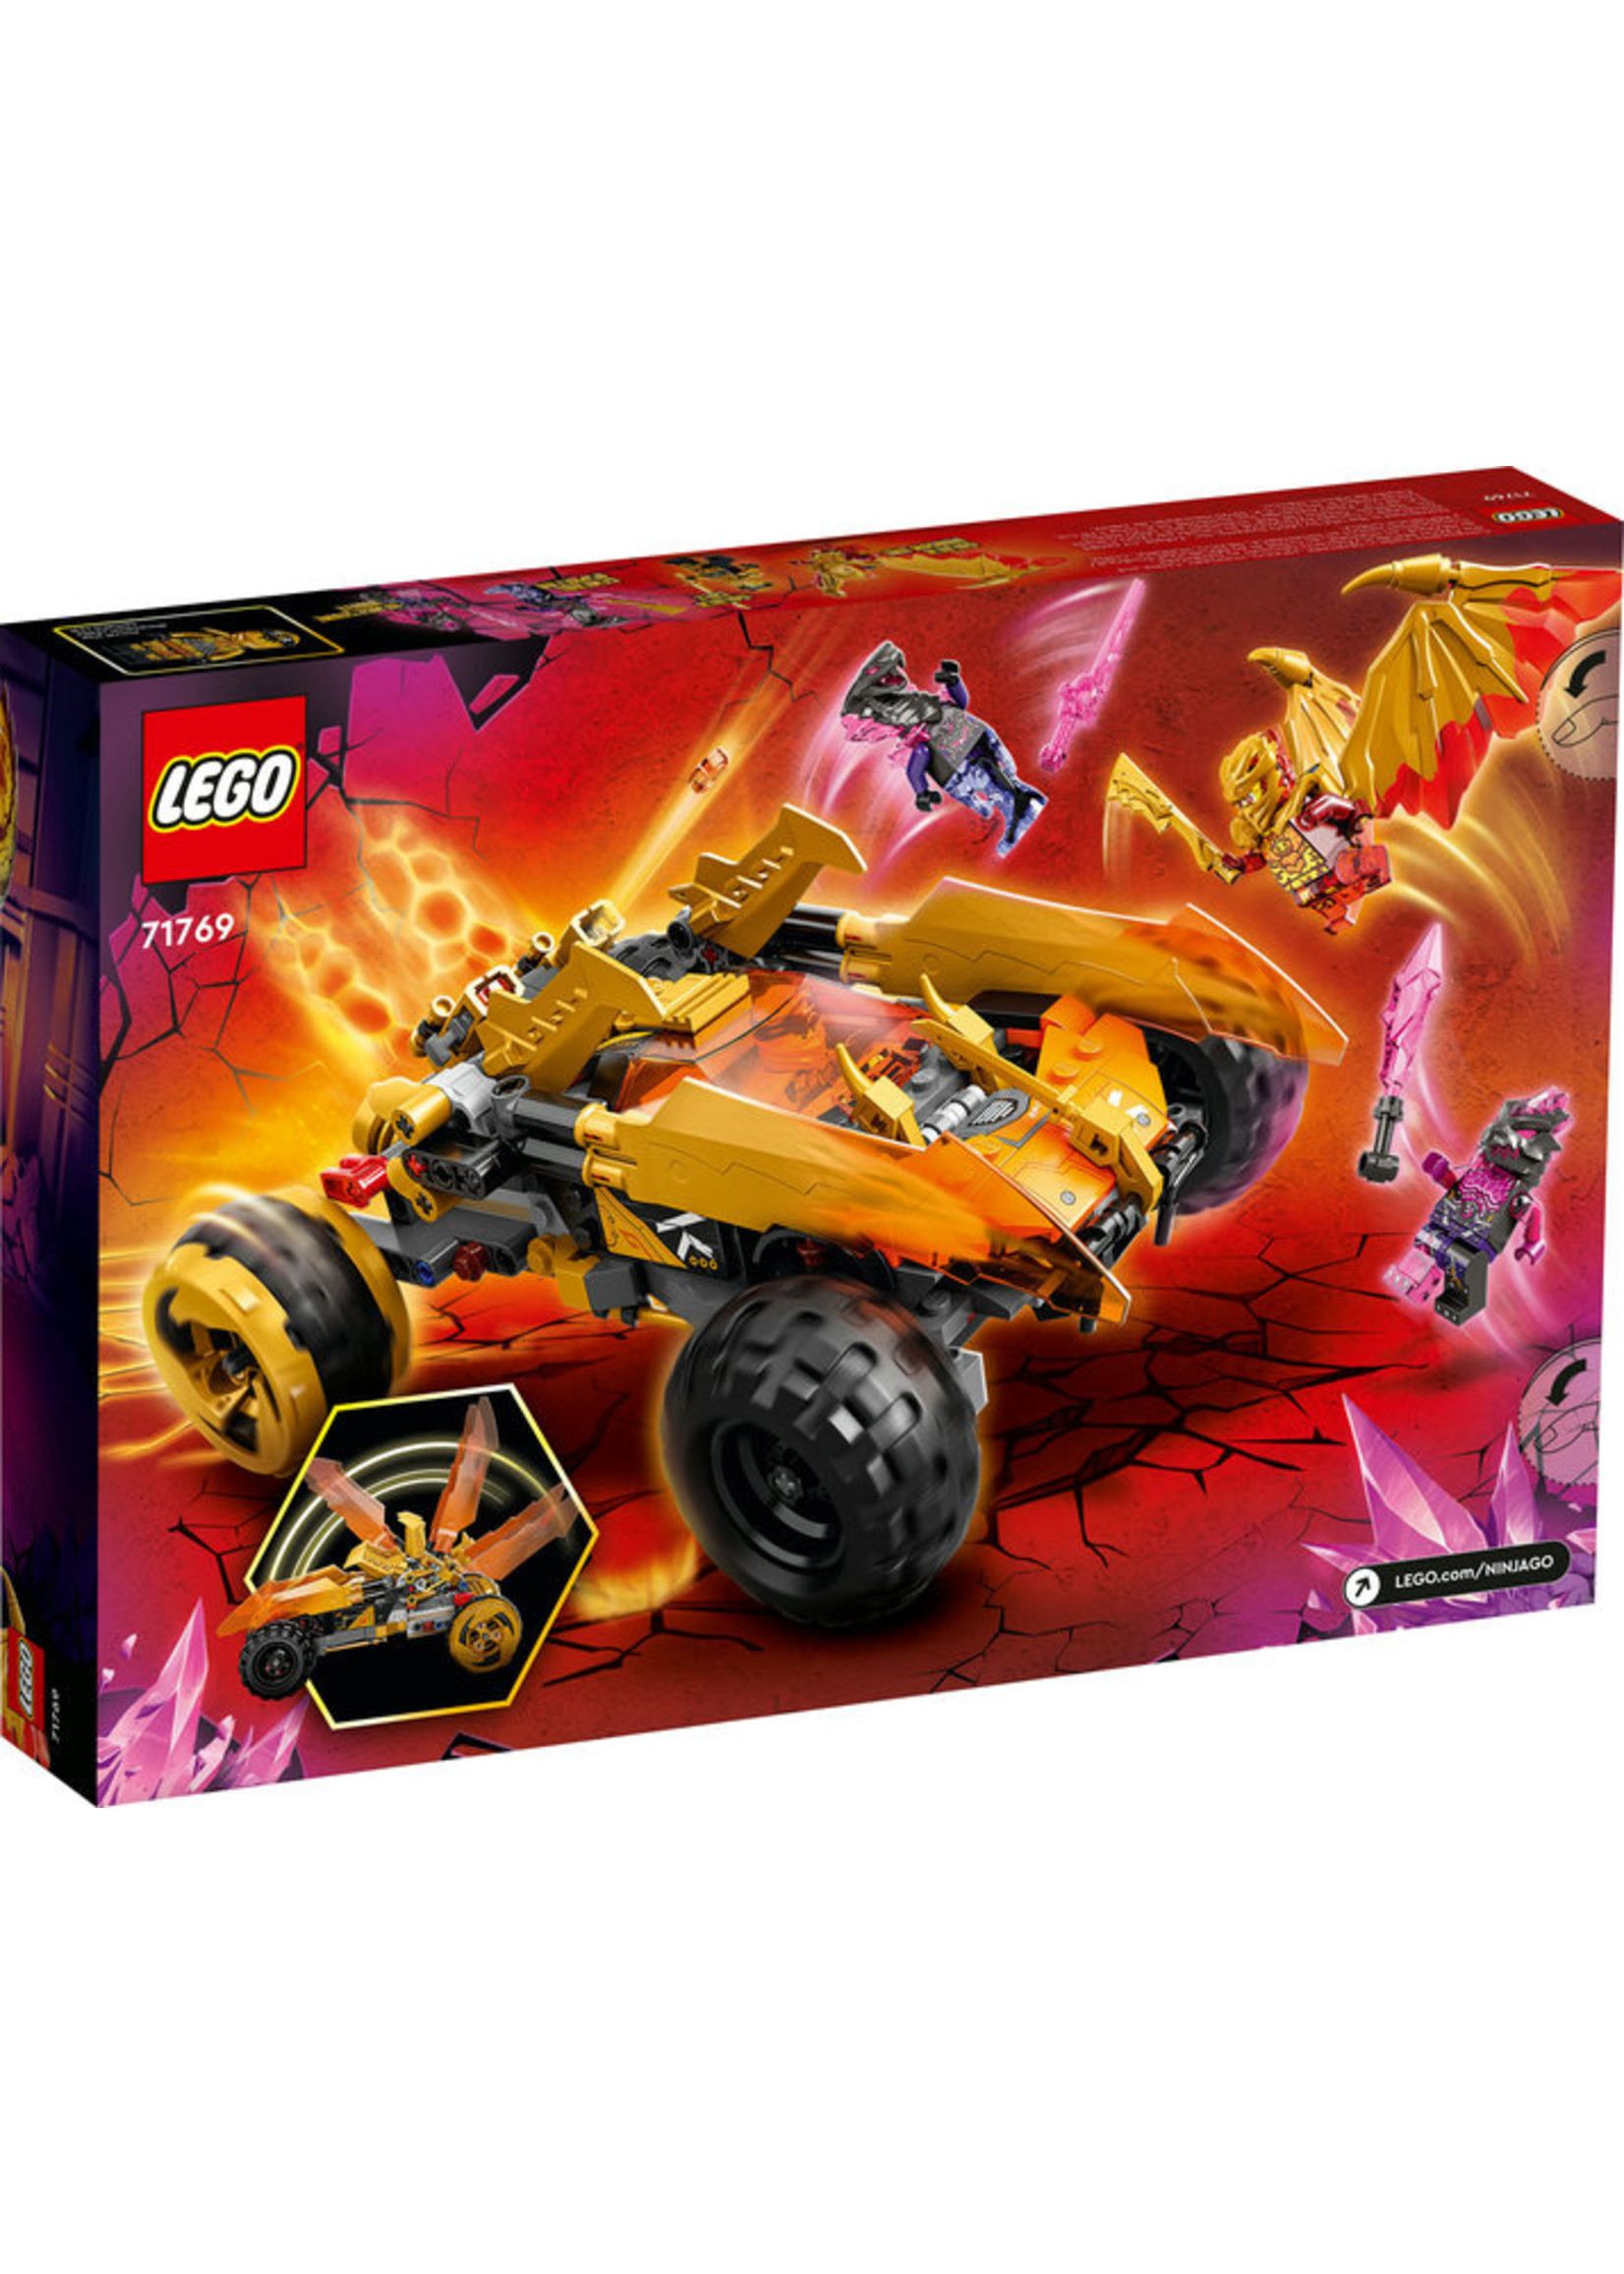 LEGO 71769 - Cole's Dragon Cruiser